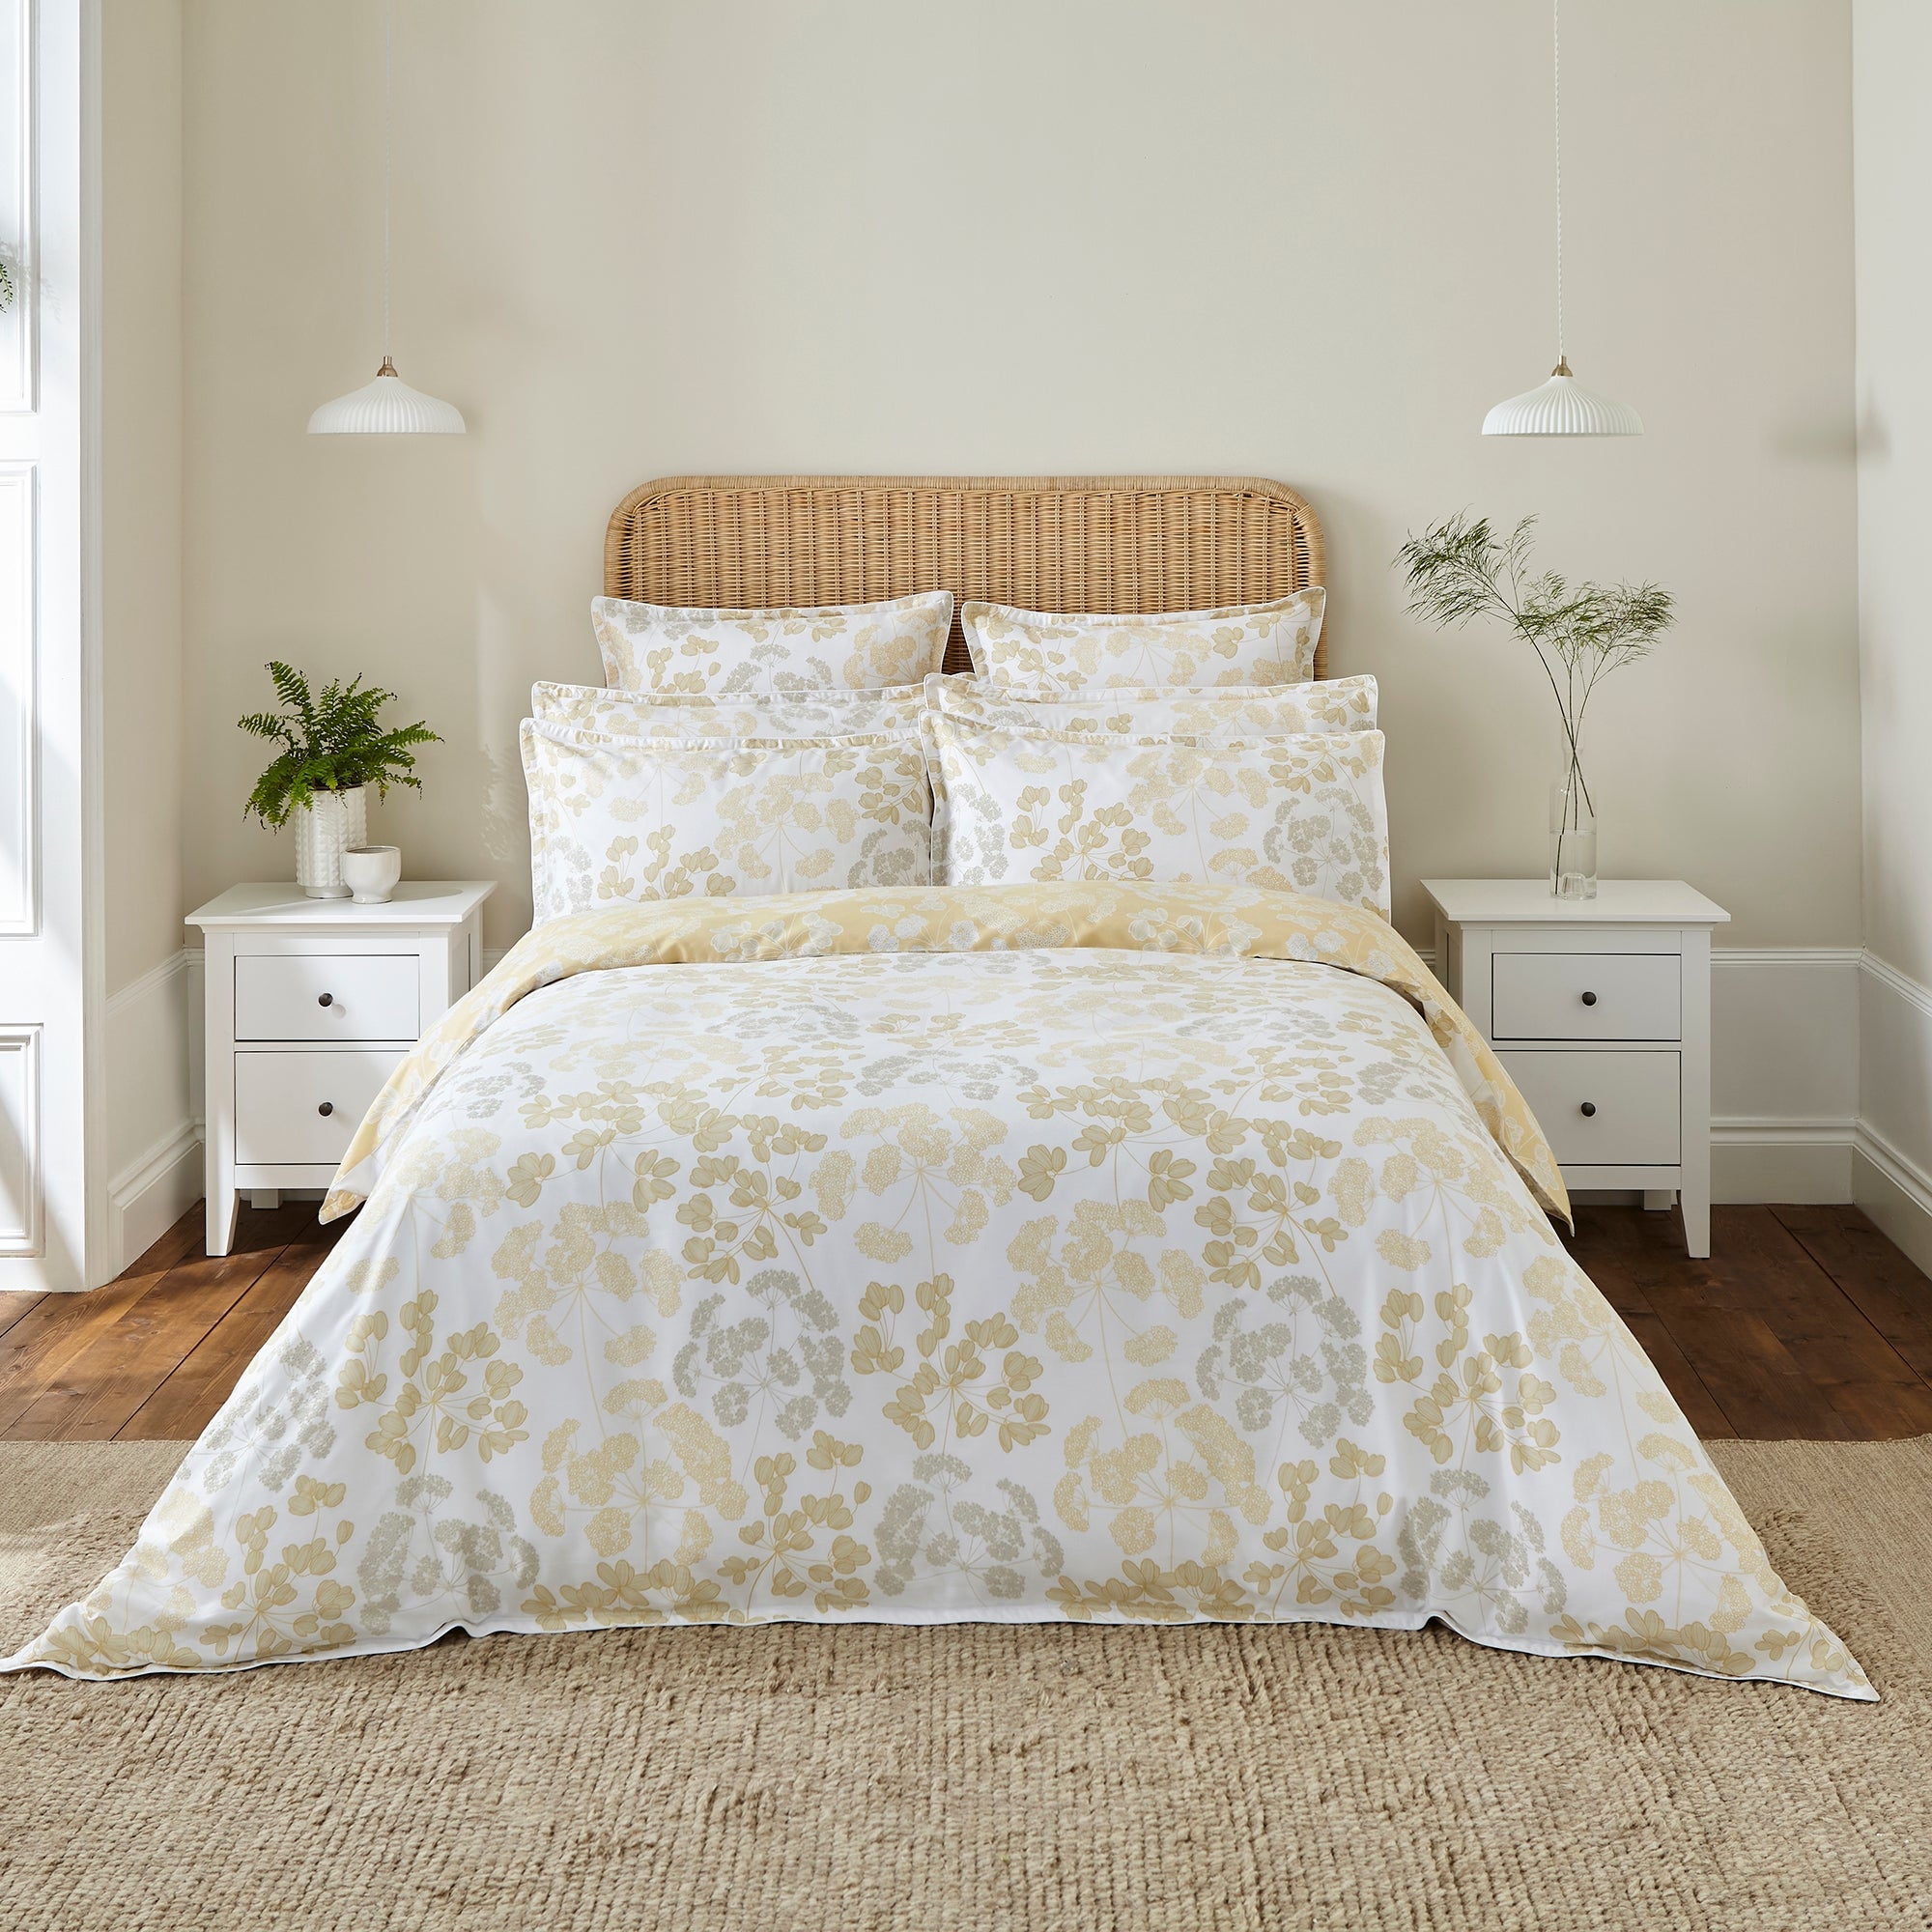 Dorma Daylesford 300 Thread Count Cotton Sateen Yellow Duvet Cover And Pillowcase Set Beigewhite